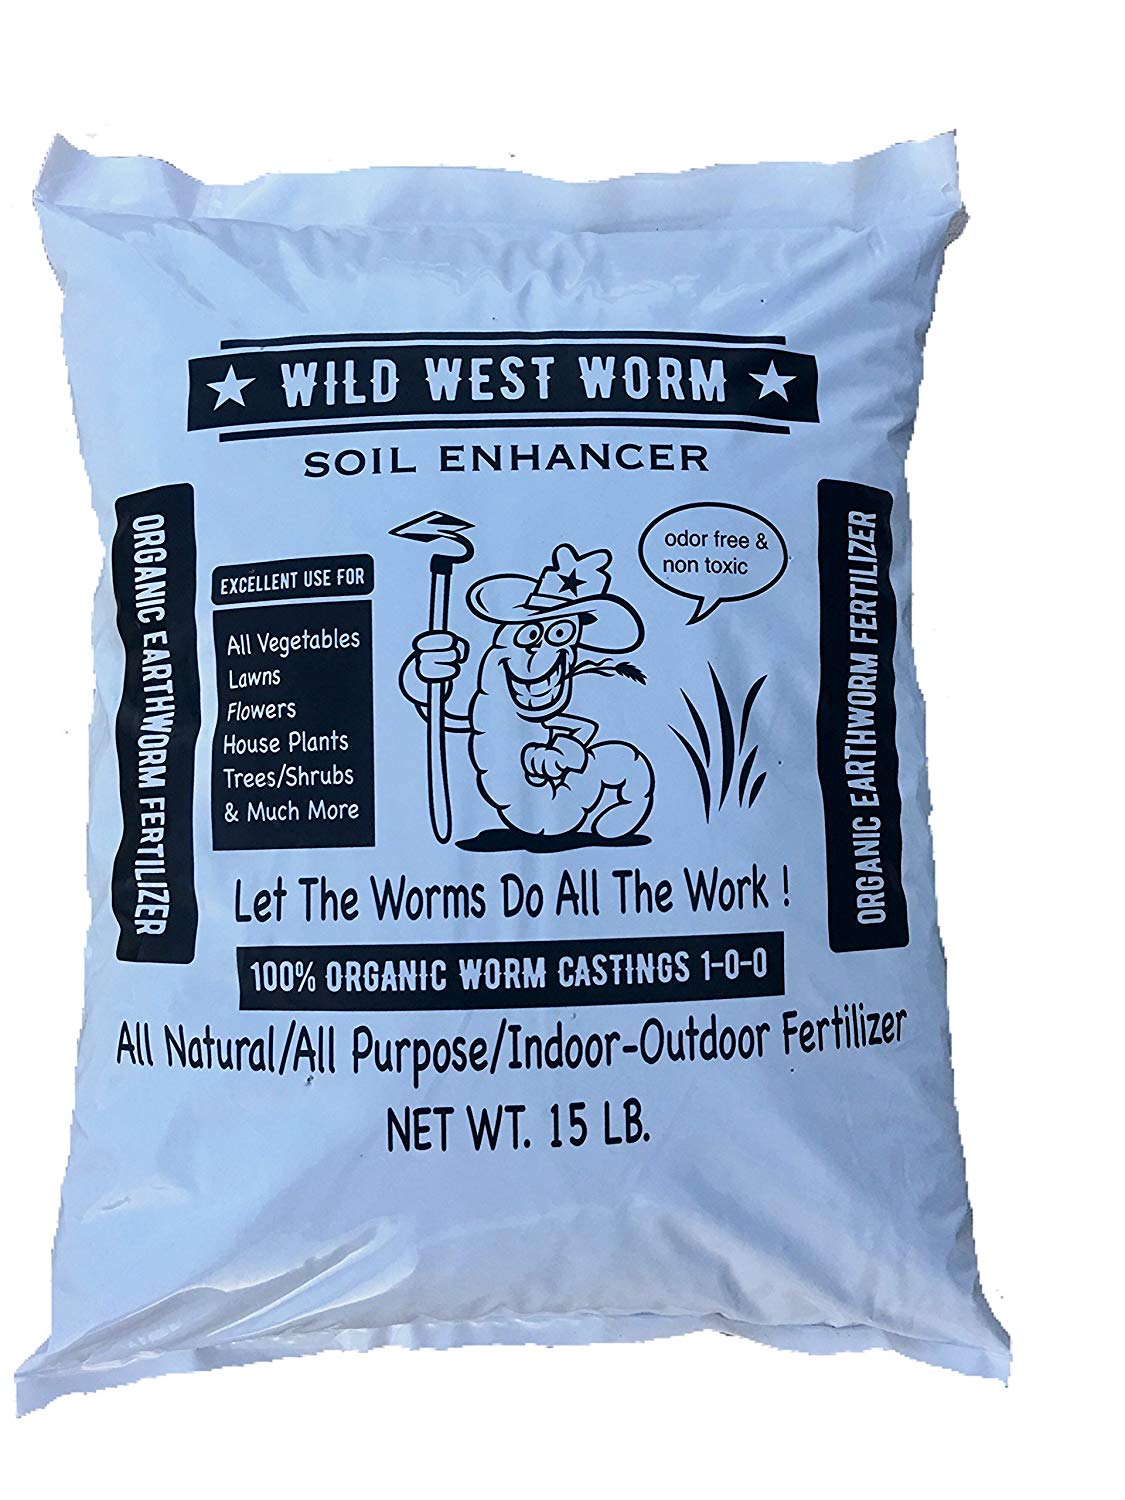 Wild West Worm Image